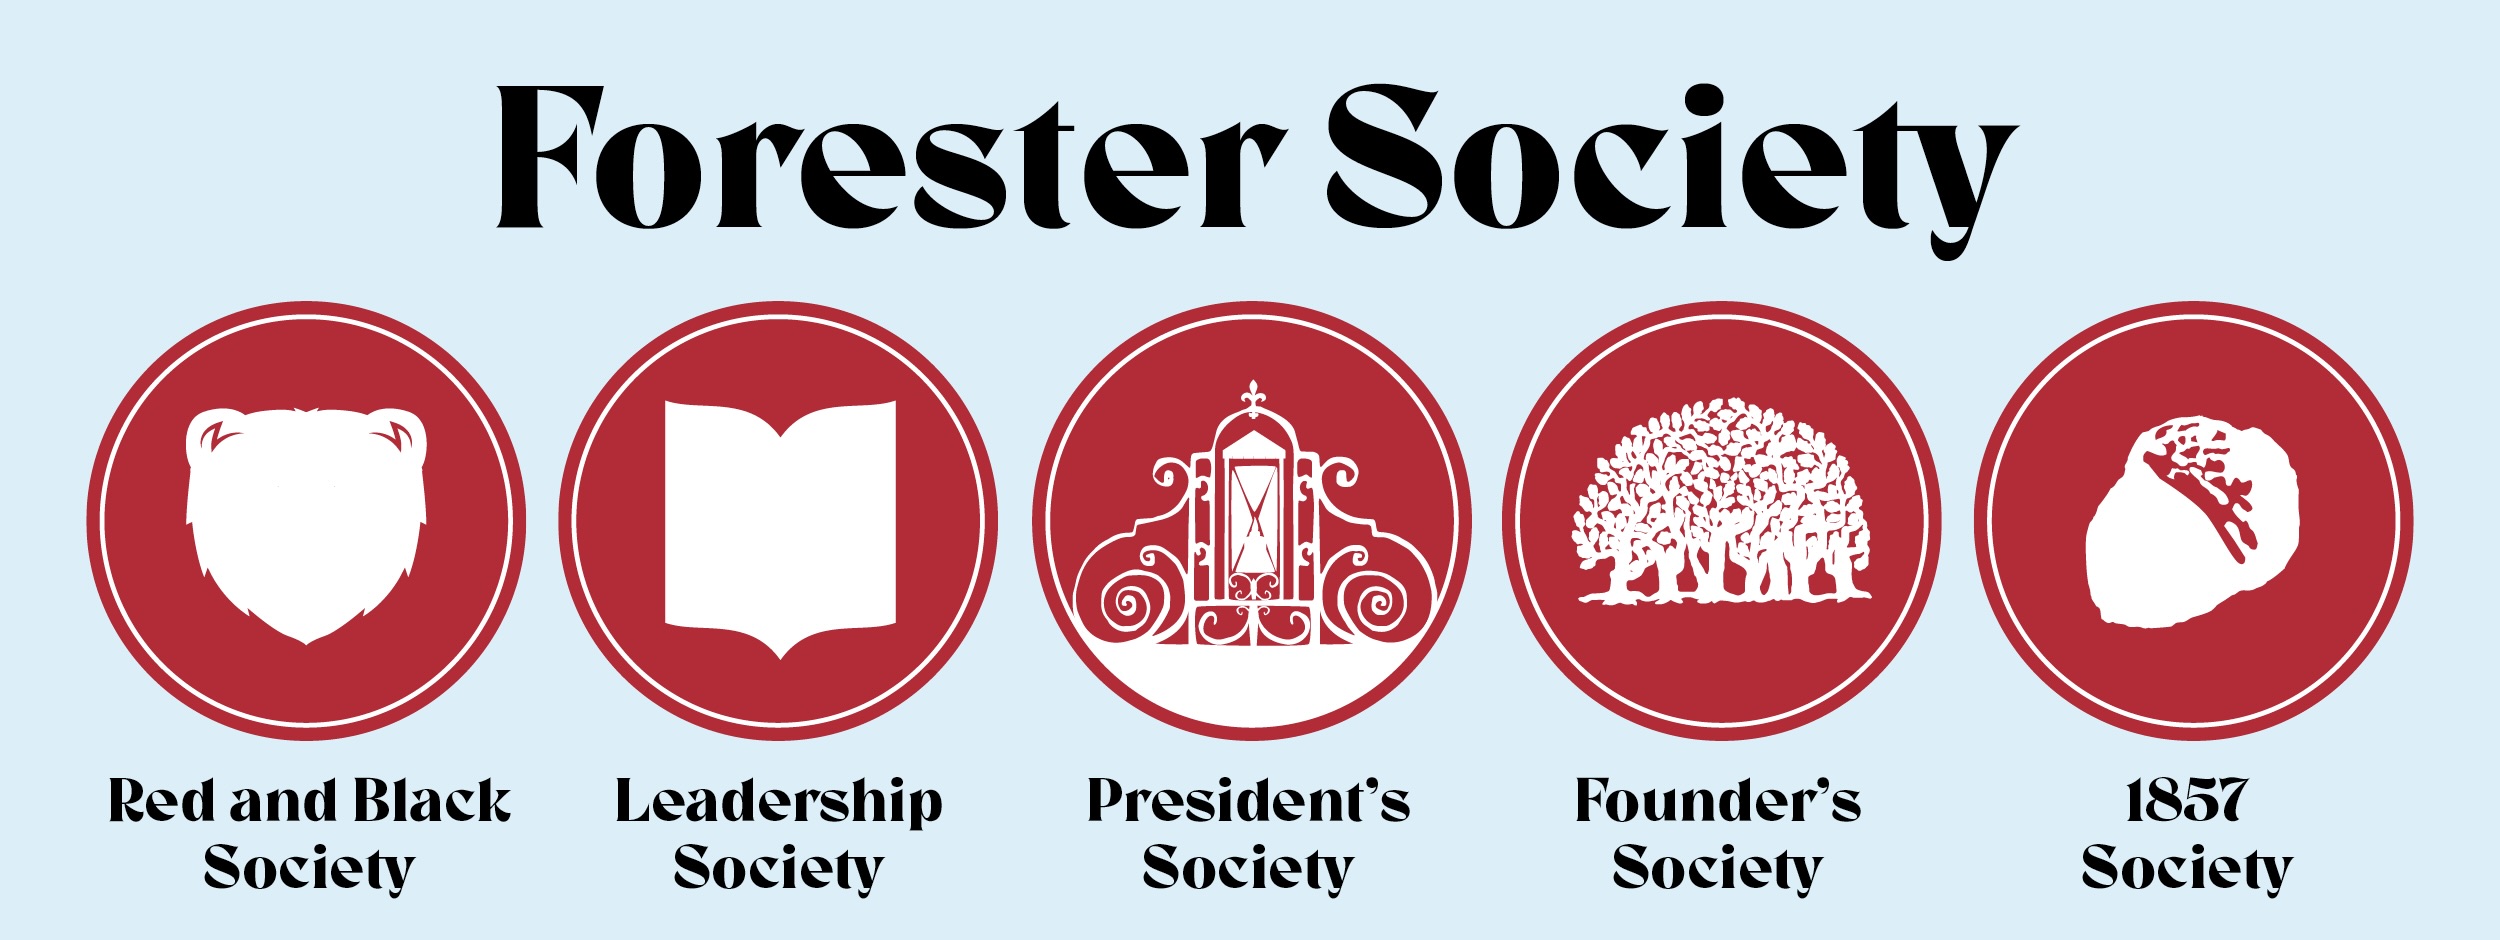 Forester Society logos